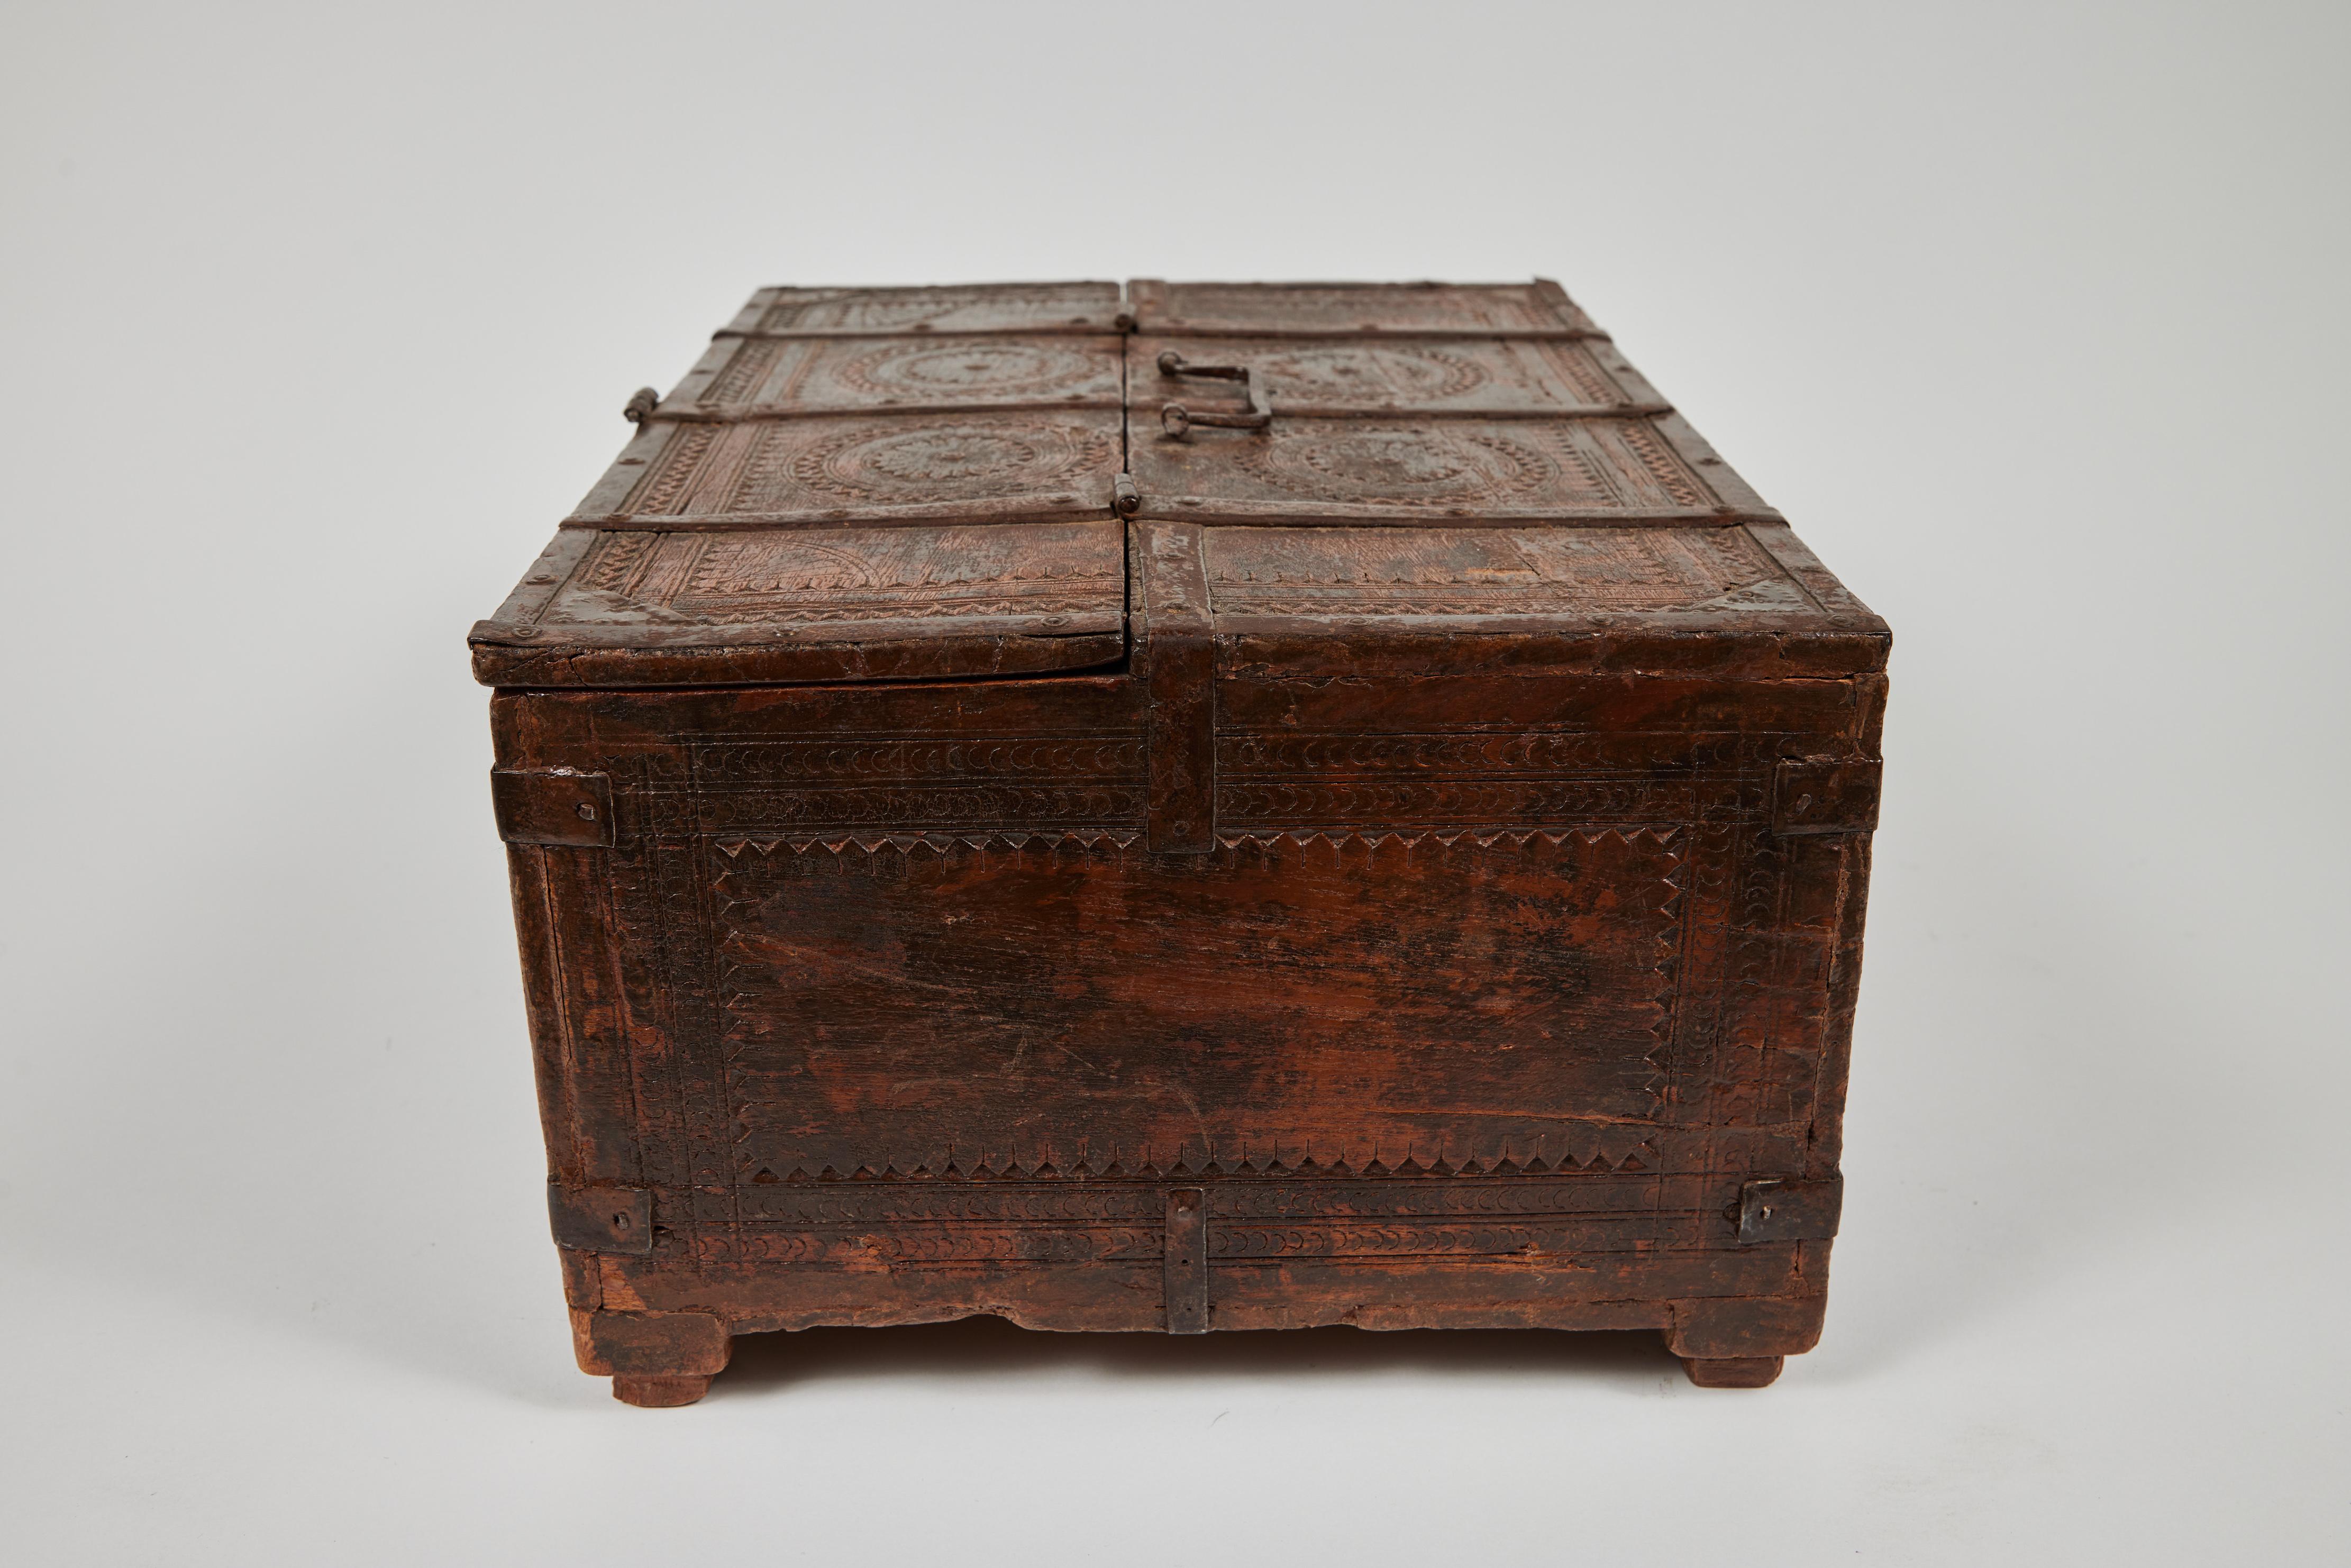 20th Century Antique Large Footed Wood Keepsake Box